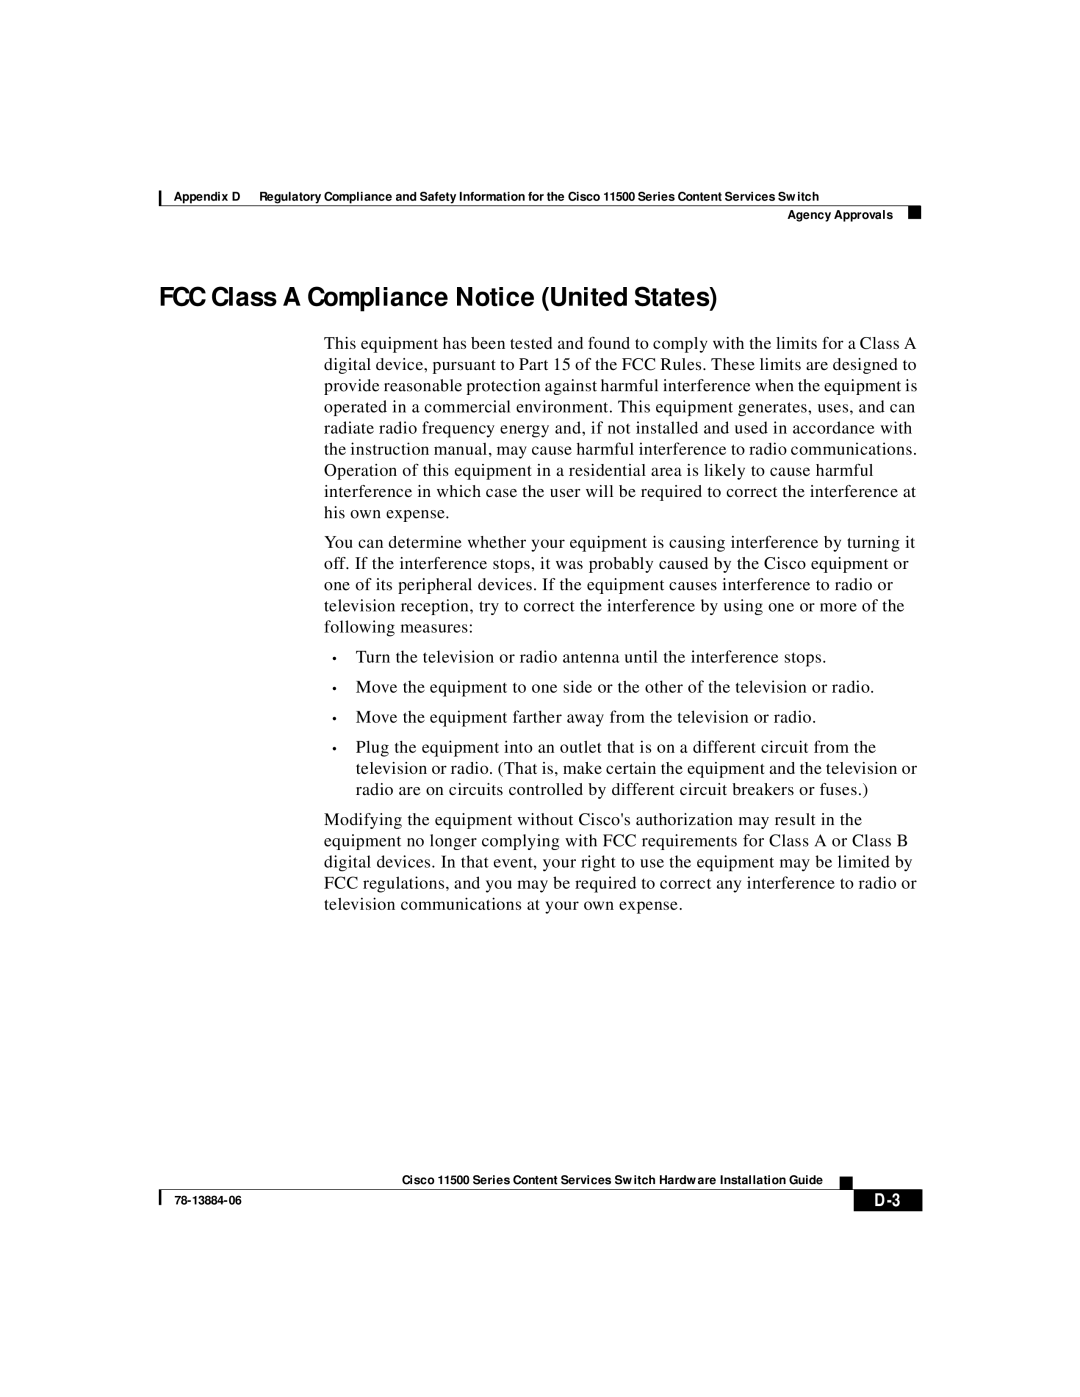 Cisco Systems 11500, 11506, 11503, 11501 appendix FCC Class A Compliance Notice United States 